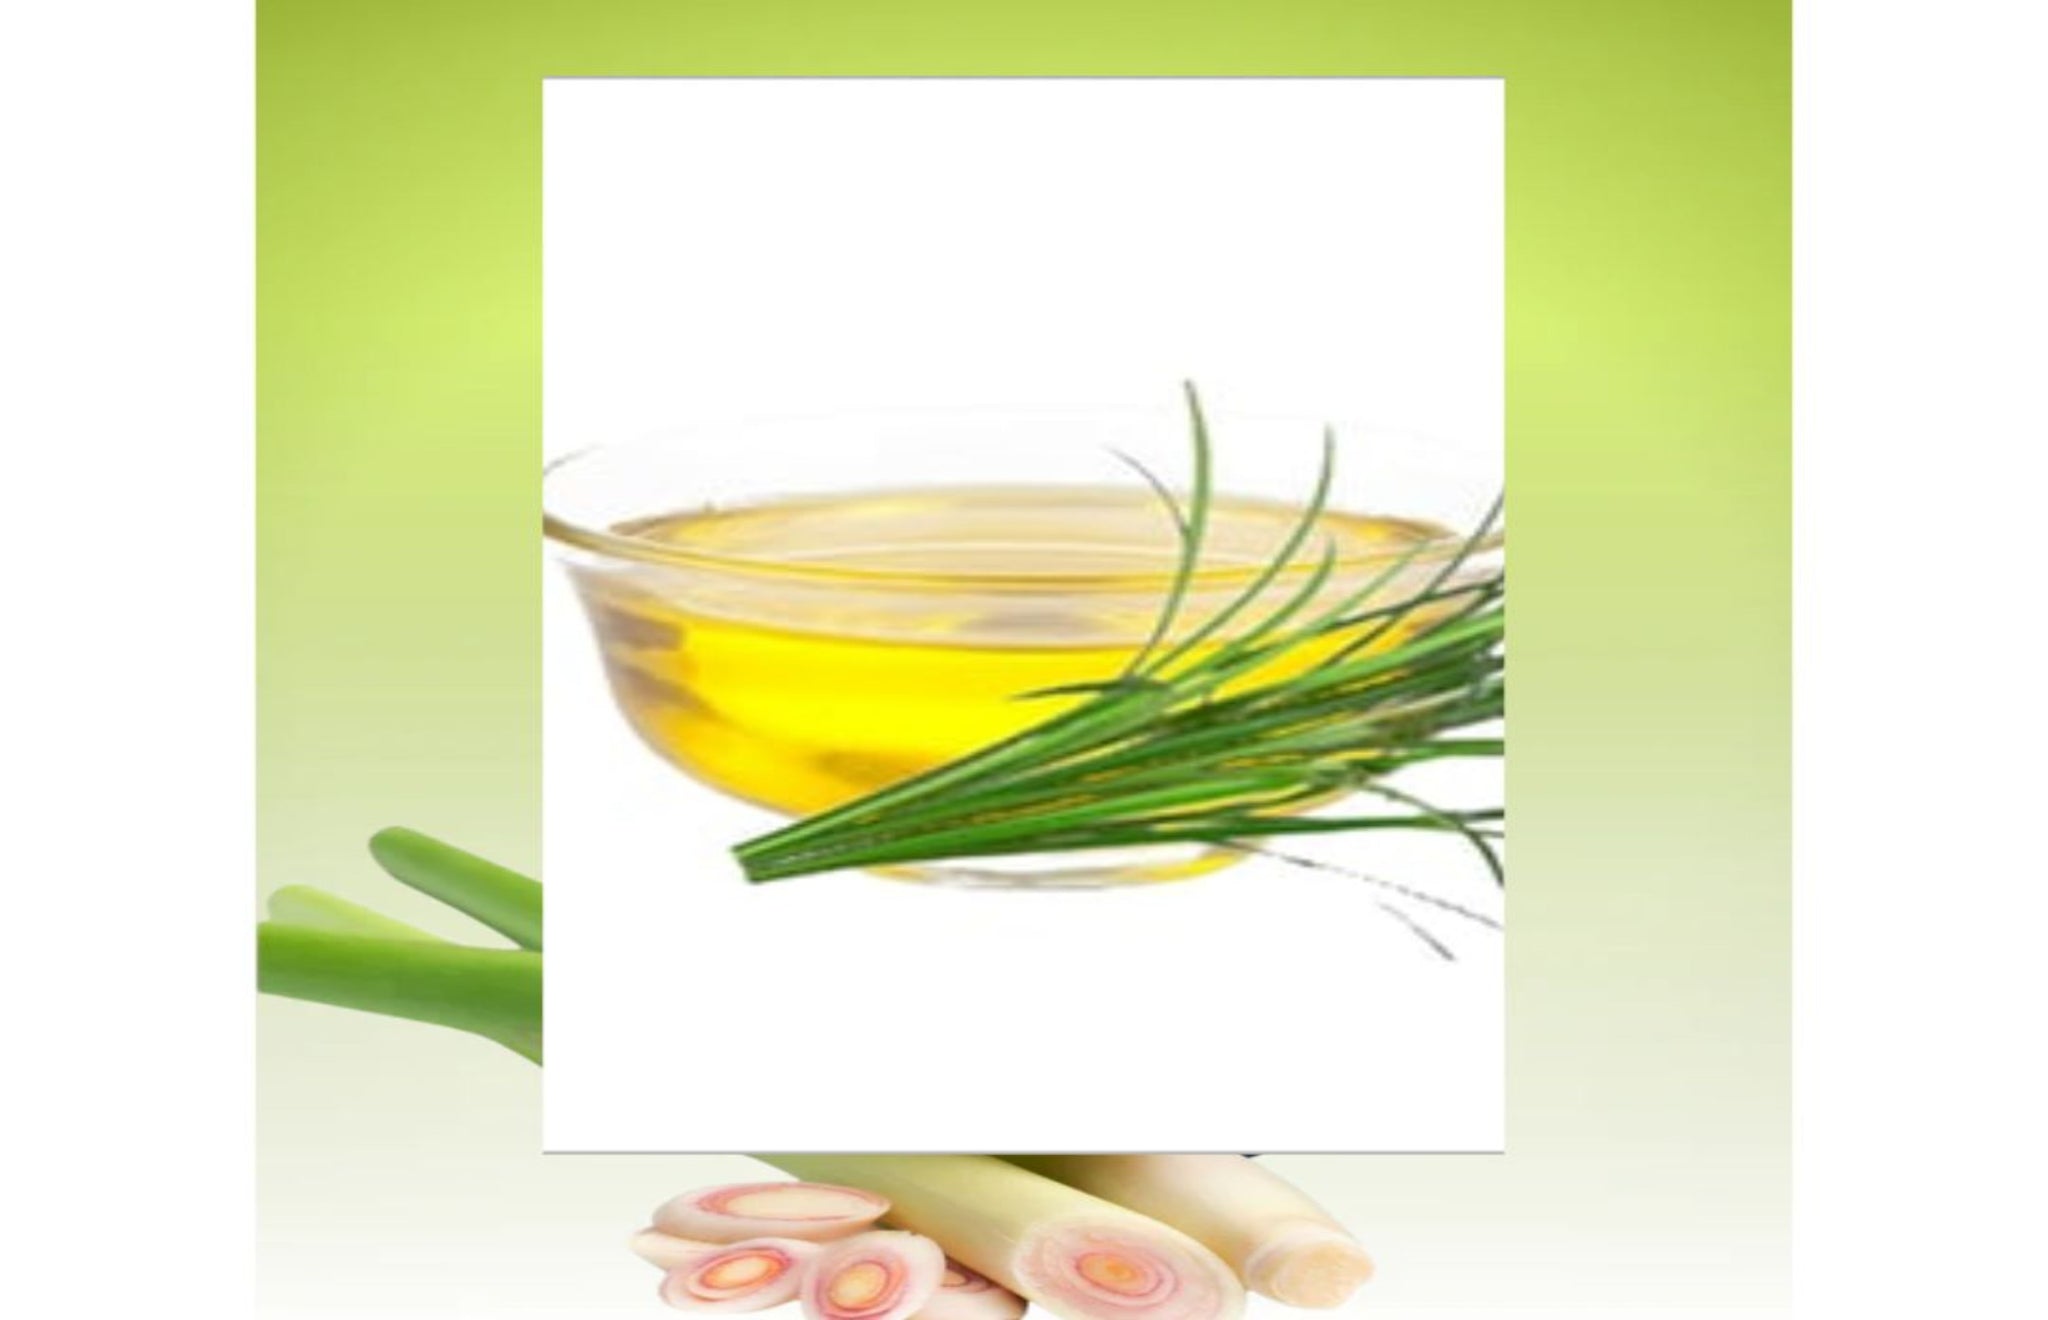 TLLGO-002- Lemon Grass Oil - Thalir Leed®